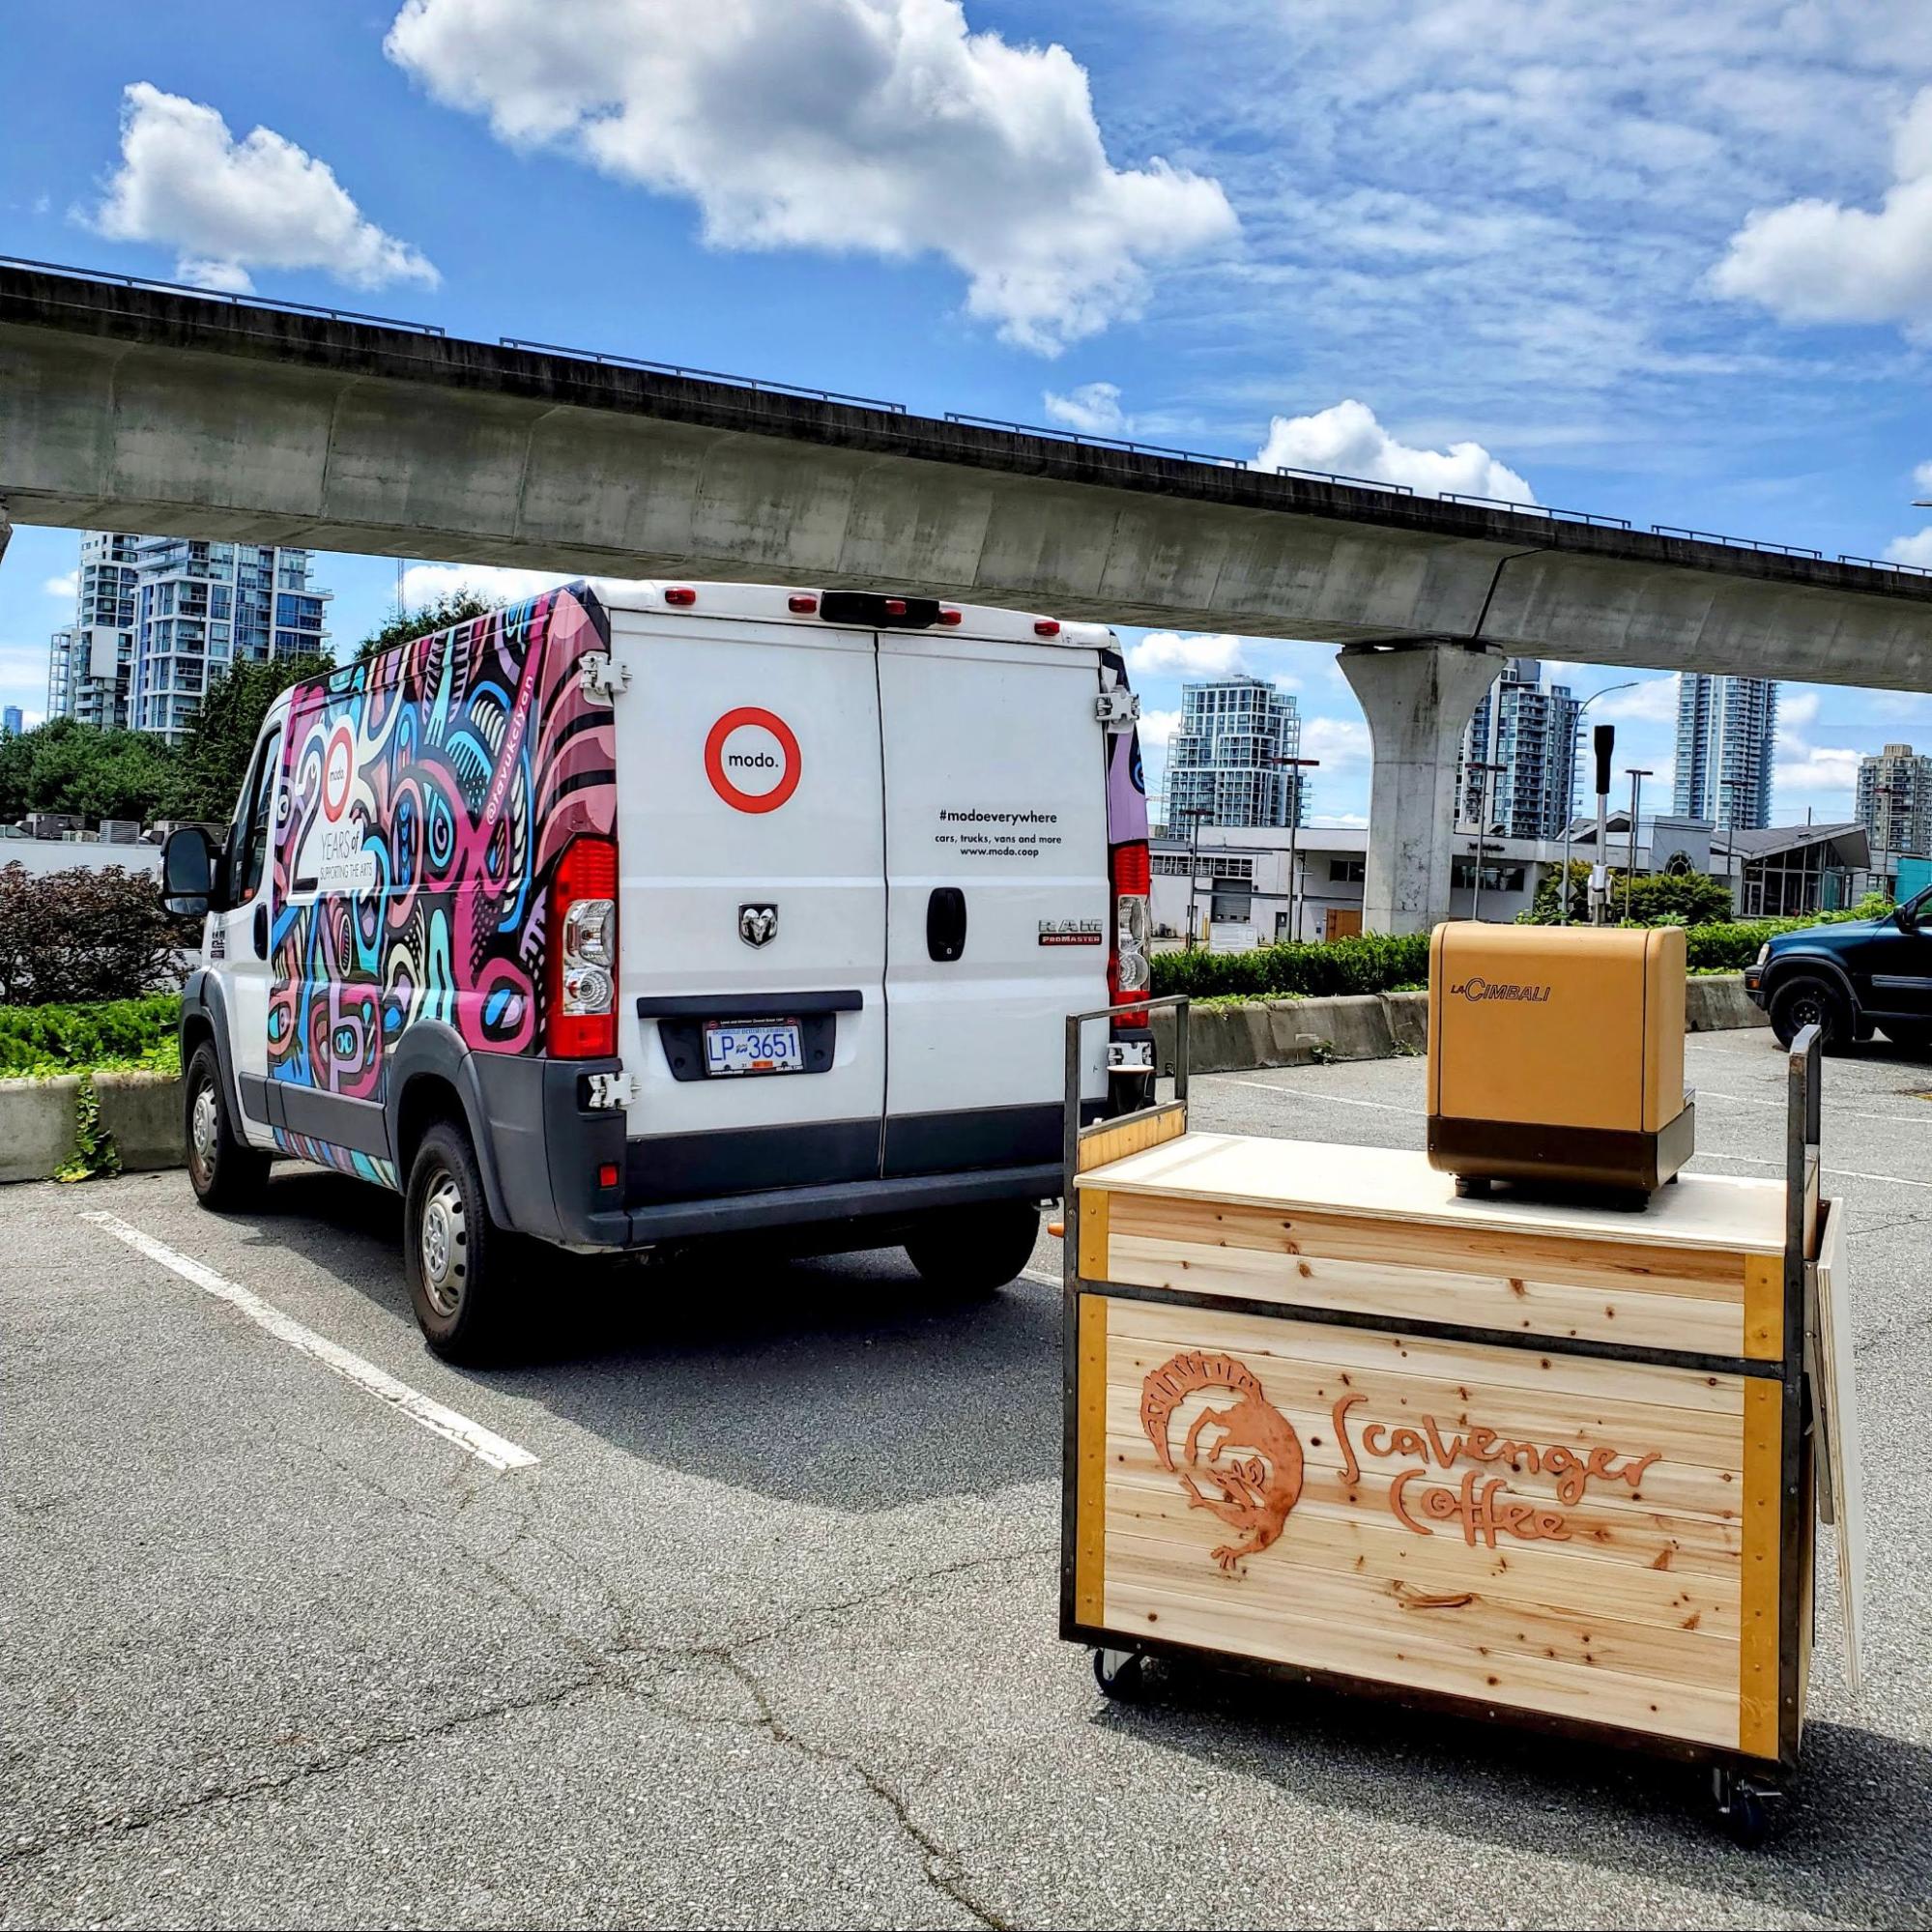 Modo's Ram Promaster cargo van parked beside Scavenger Coffee's mobile coffee cart.